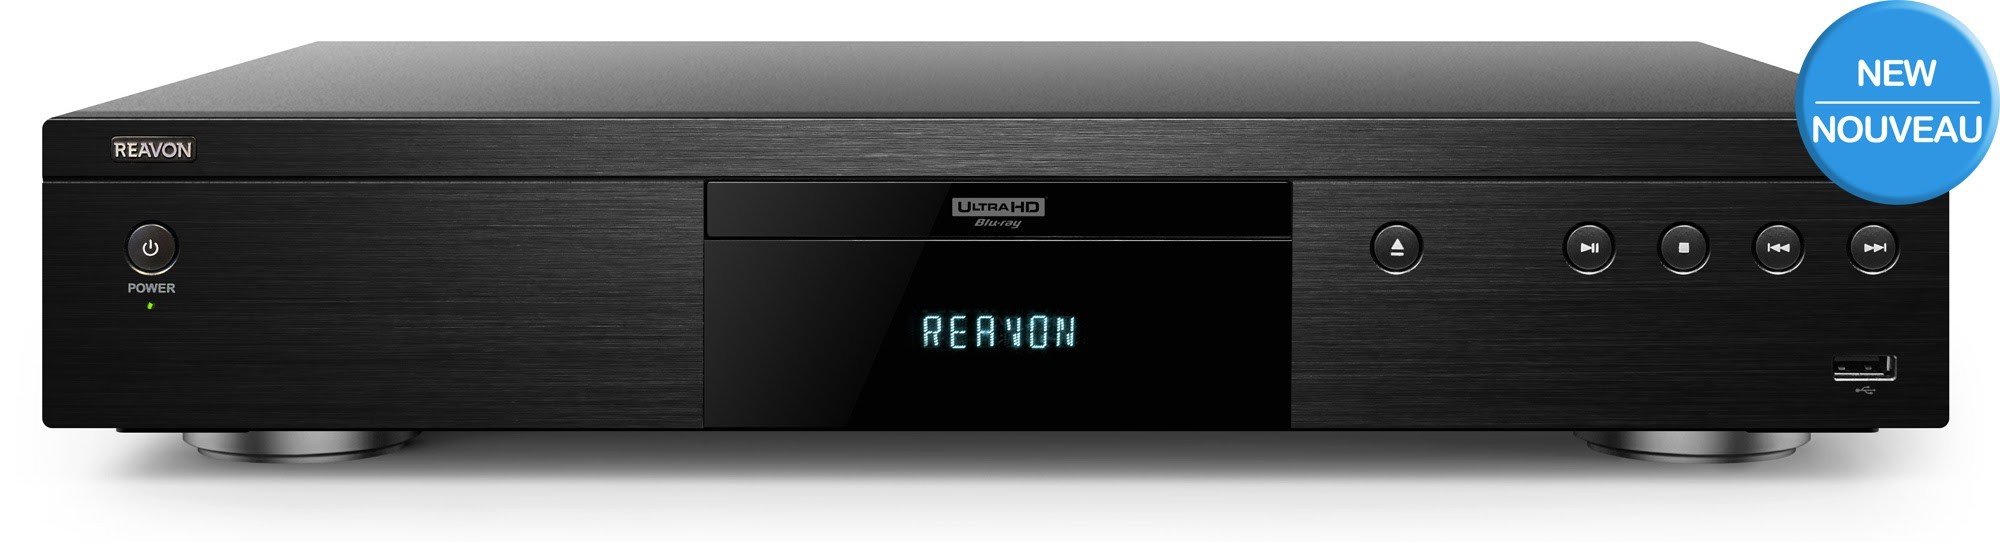 Reavon UBR-X110 4K blu ray player